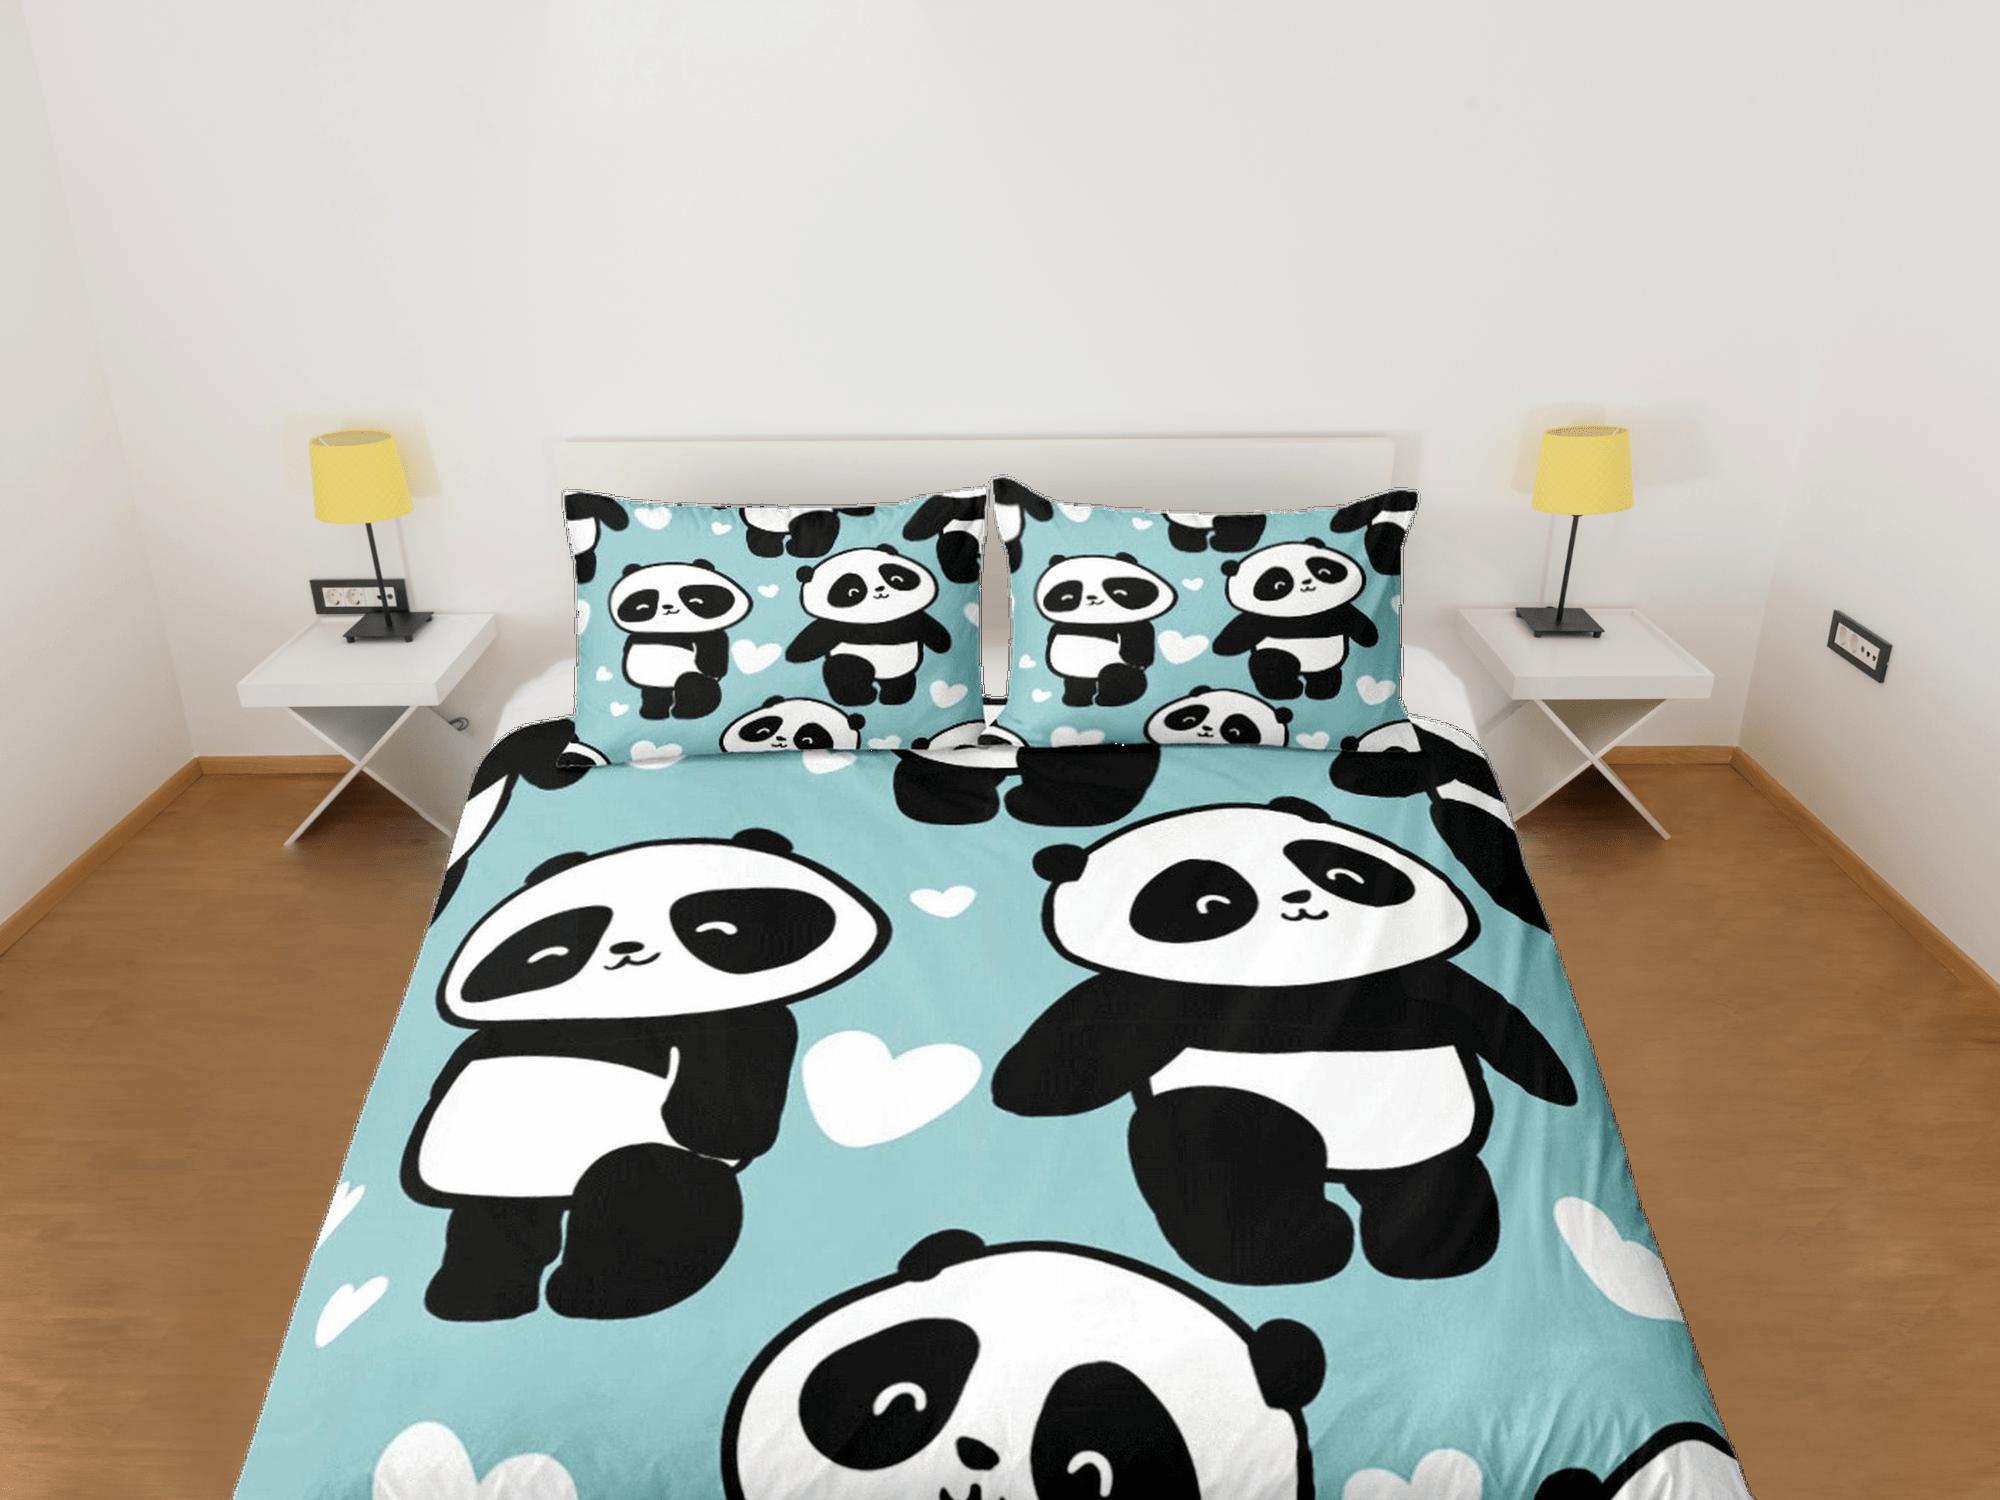 daintyduvet Cute Panda Duvet Cover Set Kids Bedroom, Green Bedding with Pillowcase